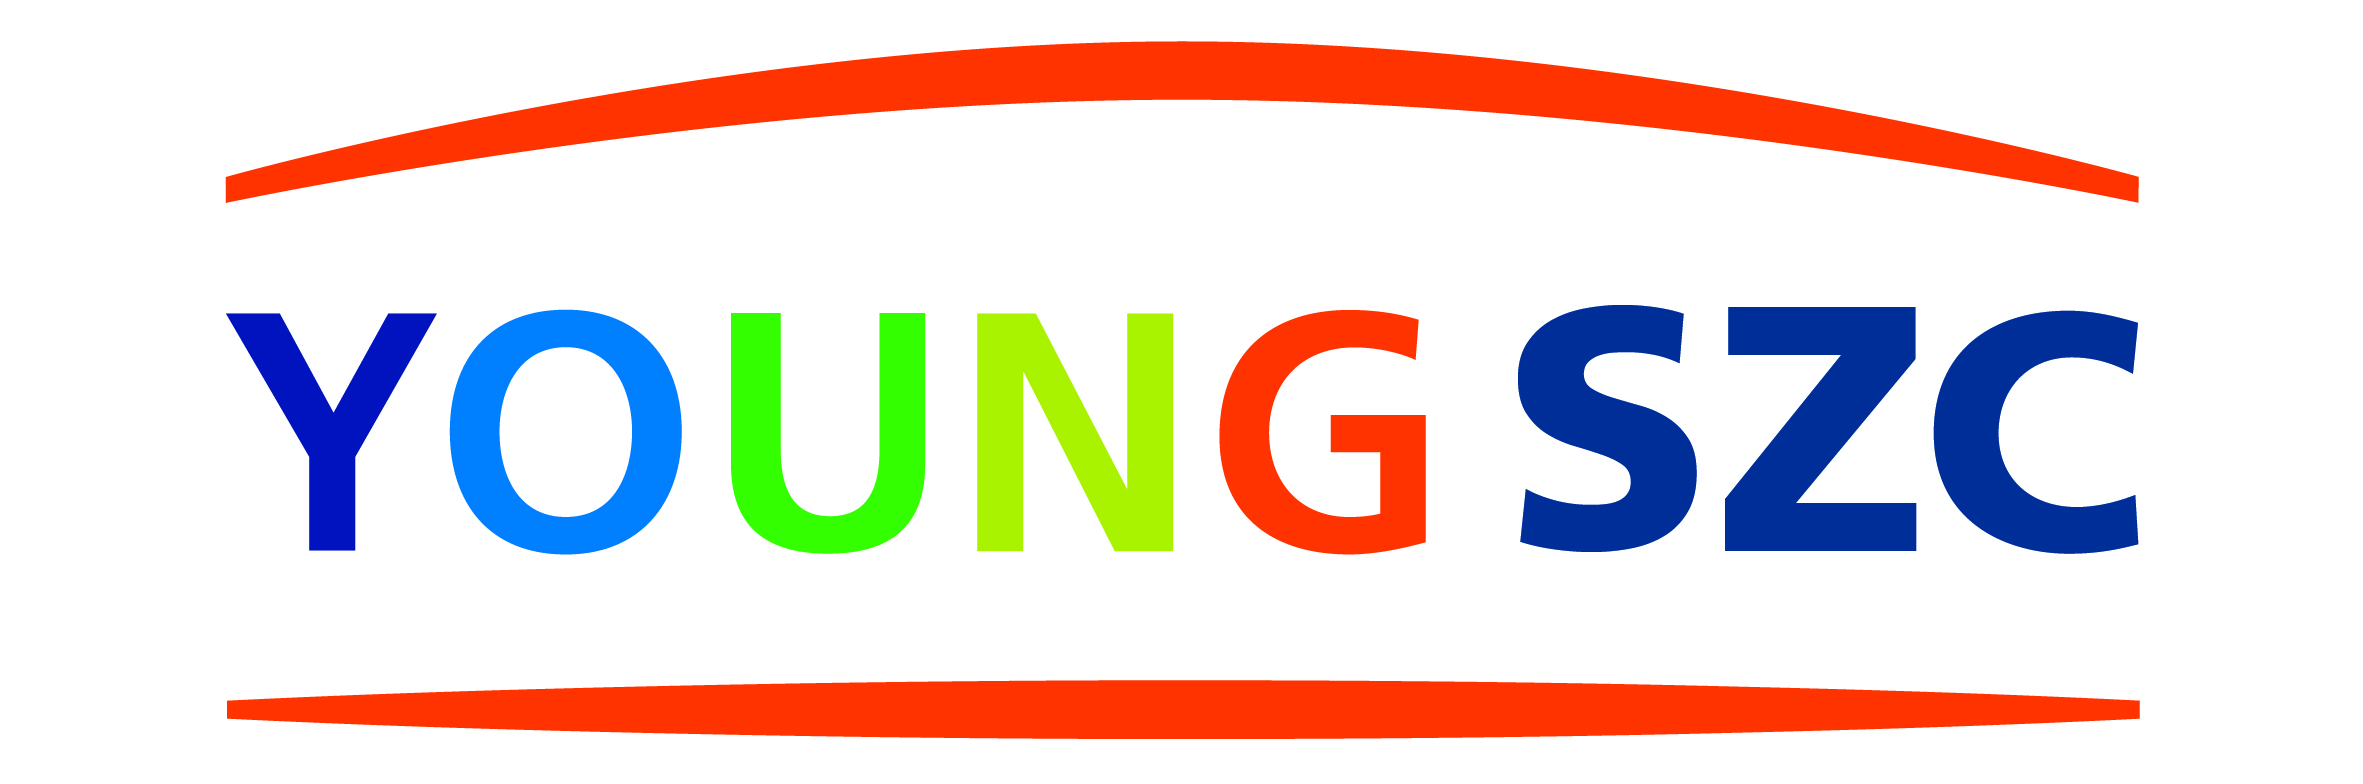 Young SZC logo